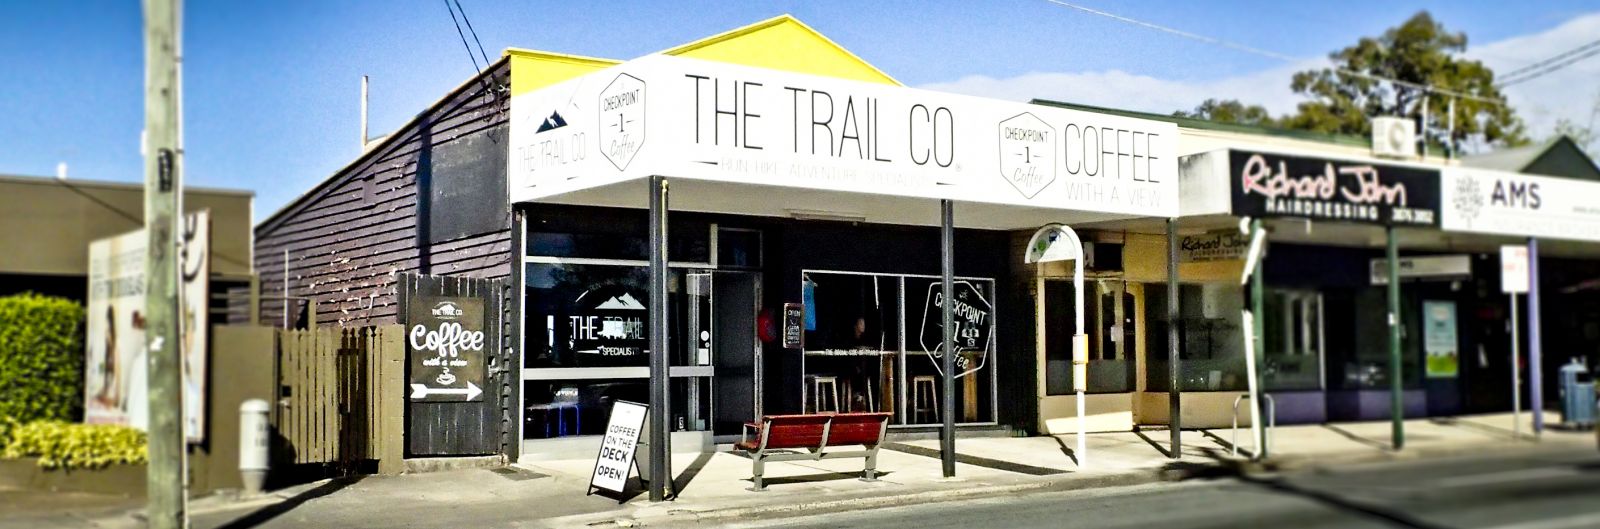 The Trail Co. Shop